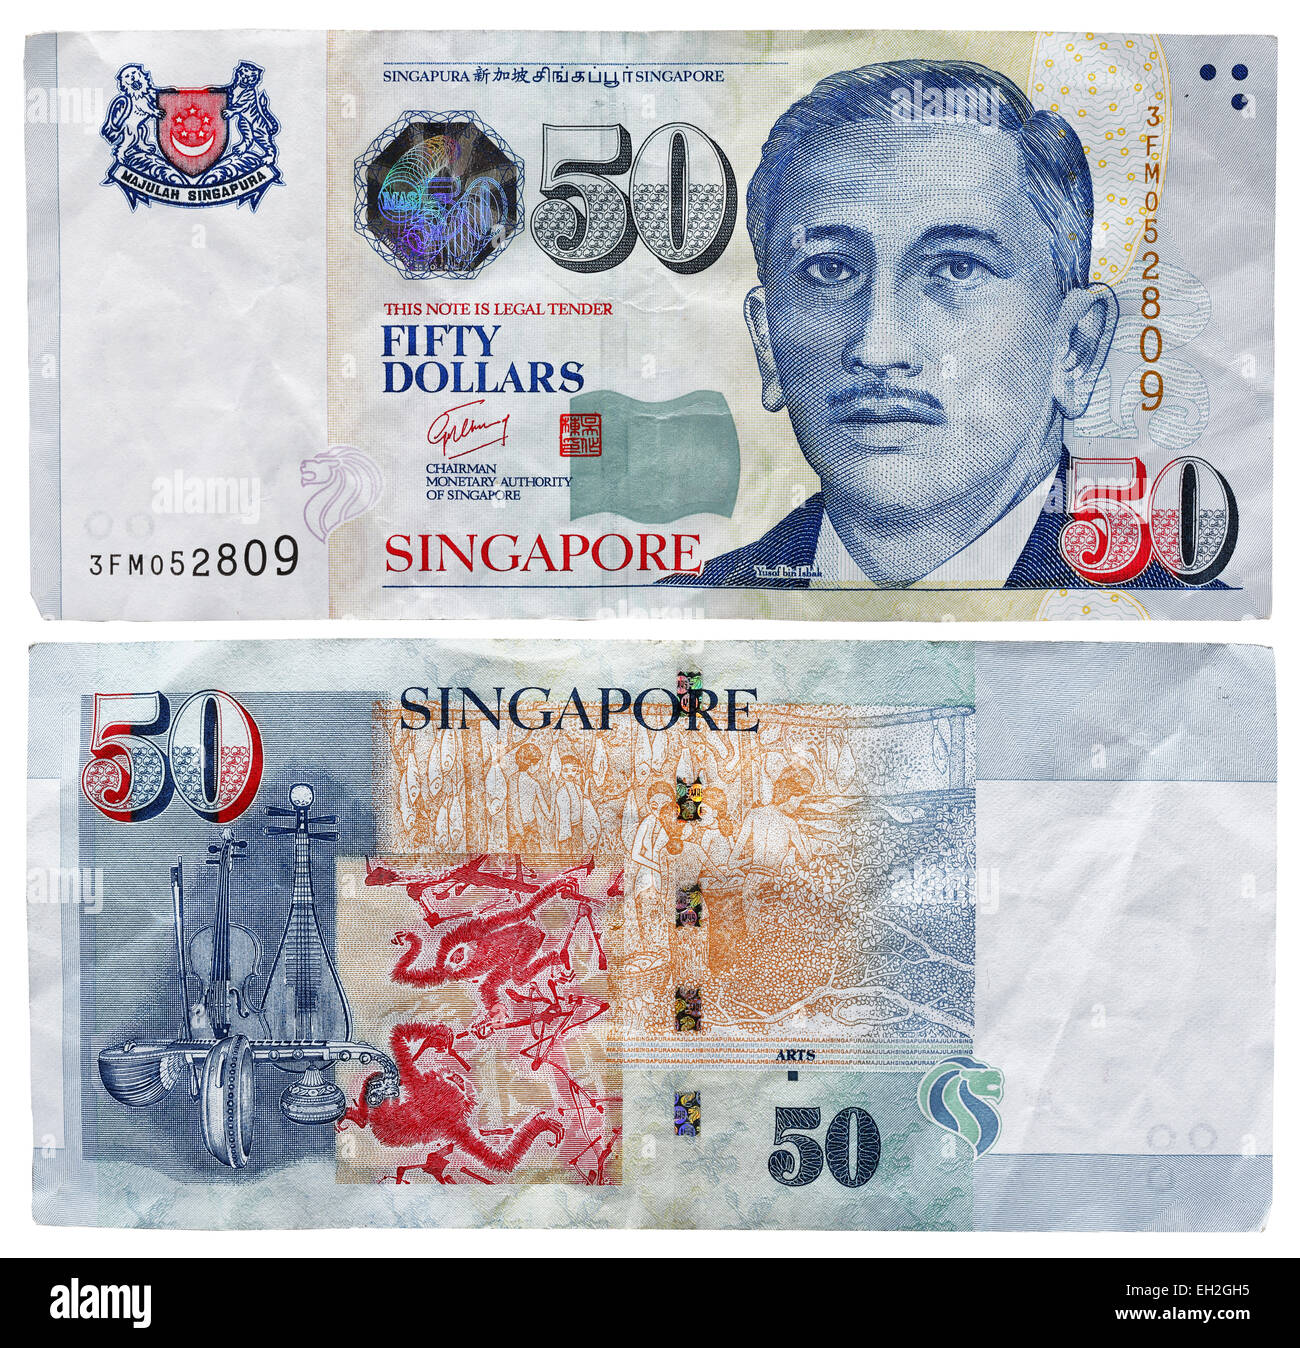 50 dollars banknote, president Yusof bin Ishak, Arts, Singapore, 2008 Stock Photo